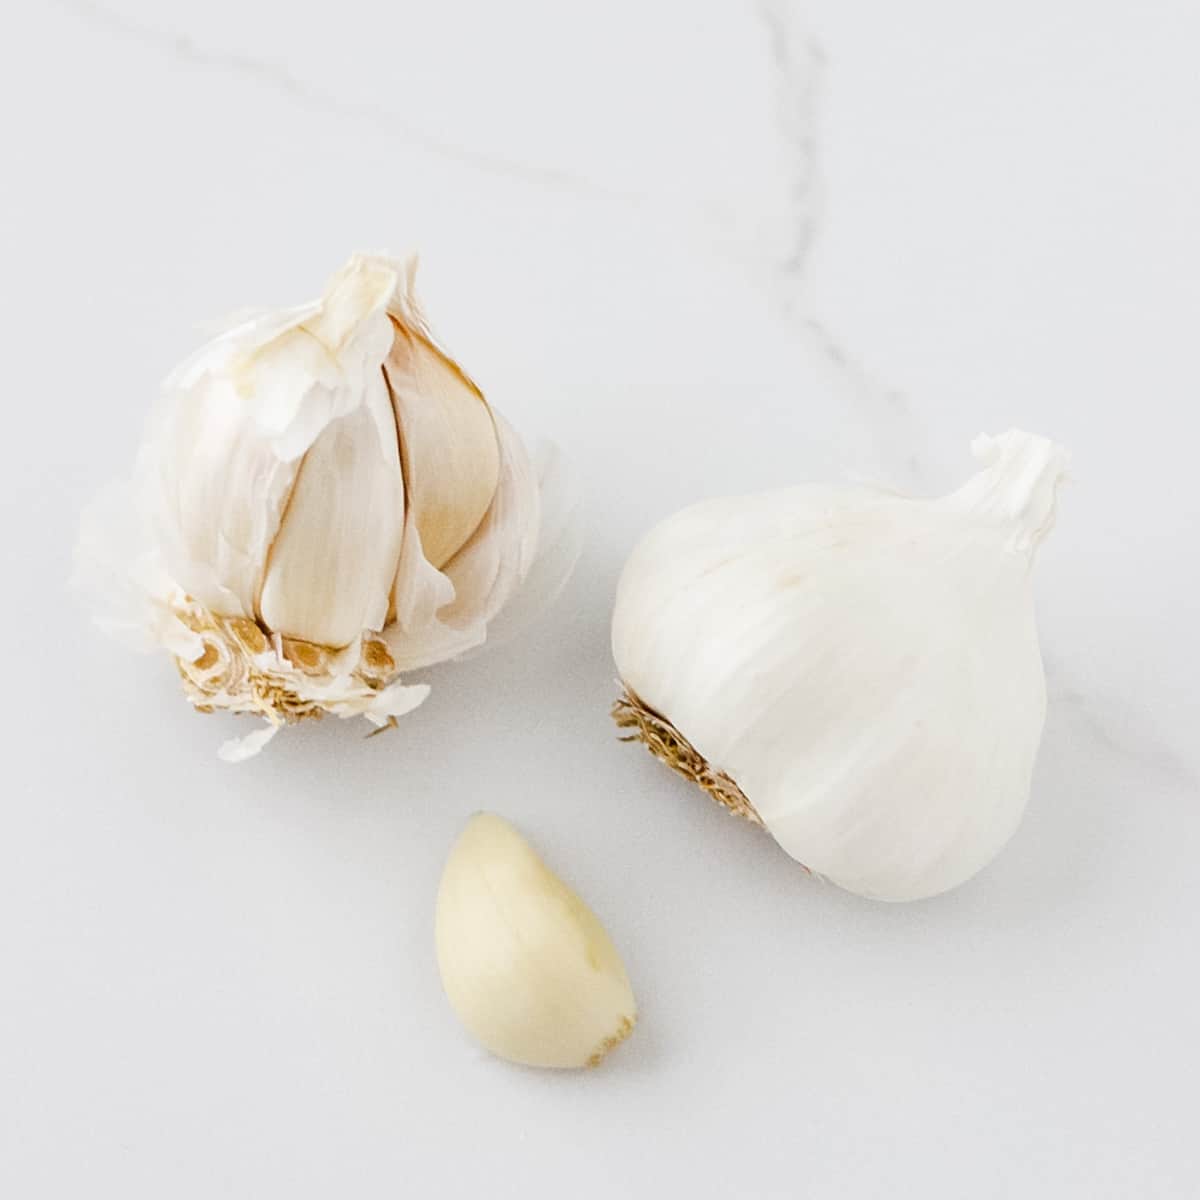 two heads of garlic next to one clove of garlic